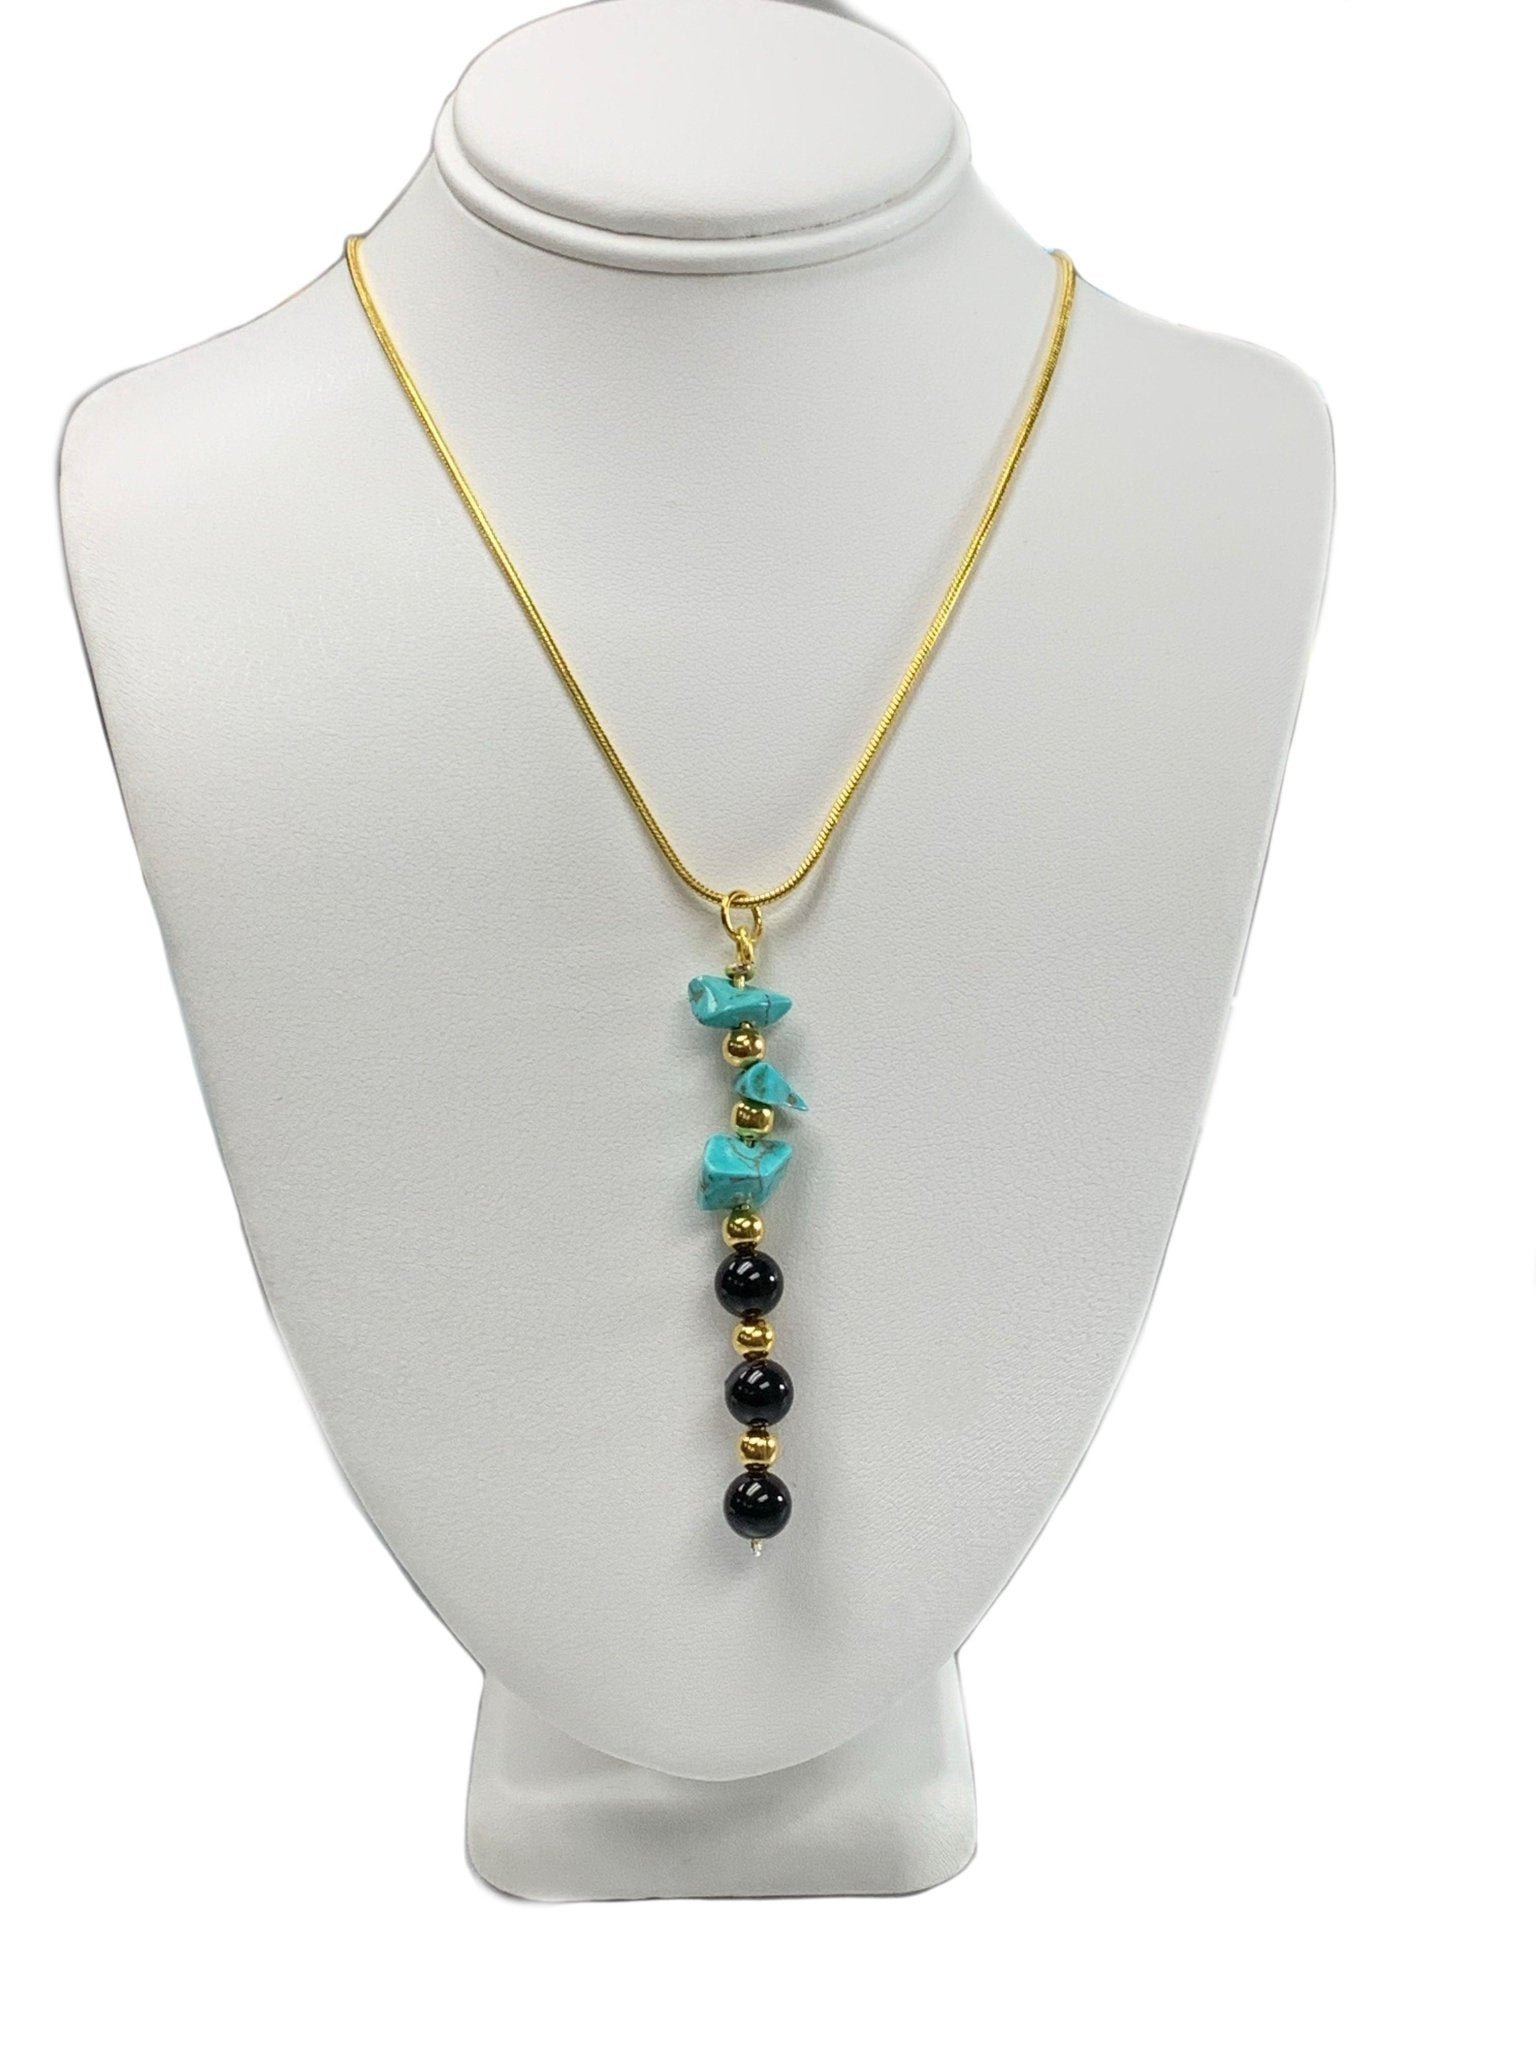 🔴SOLD🔴 Monica Handmade Genuine Turquoise and Onyx Pendant Necklace - Born Mystics